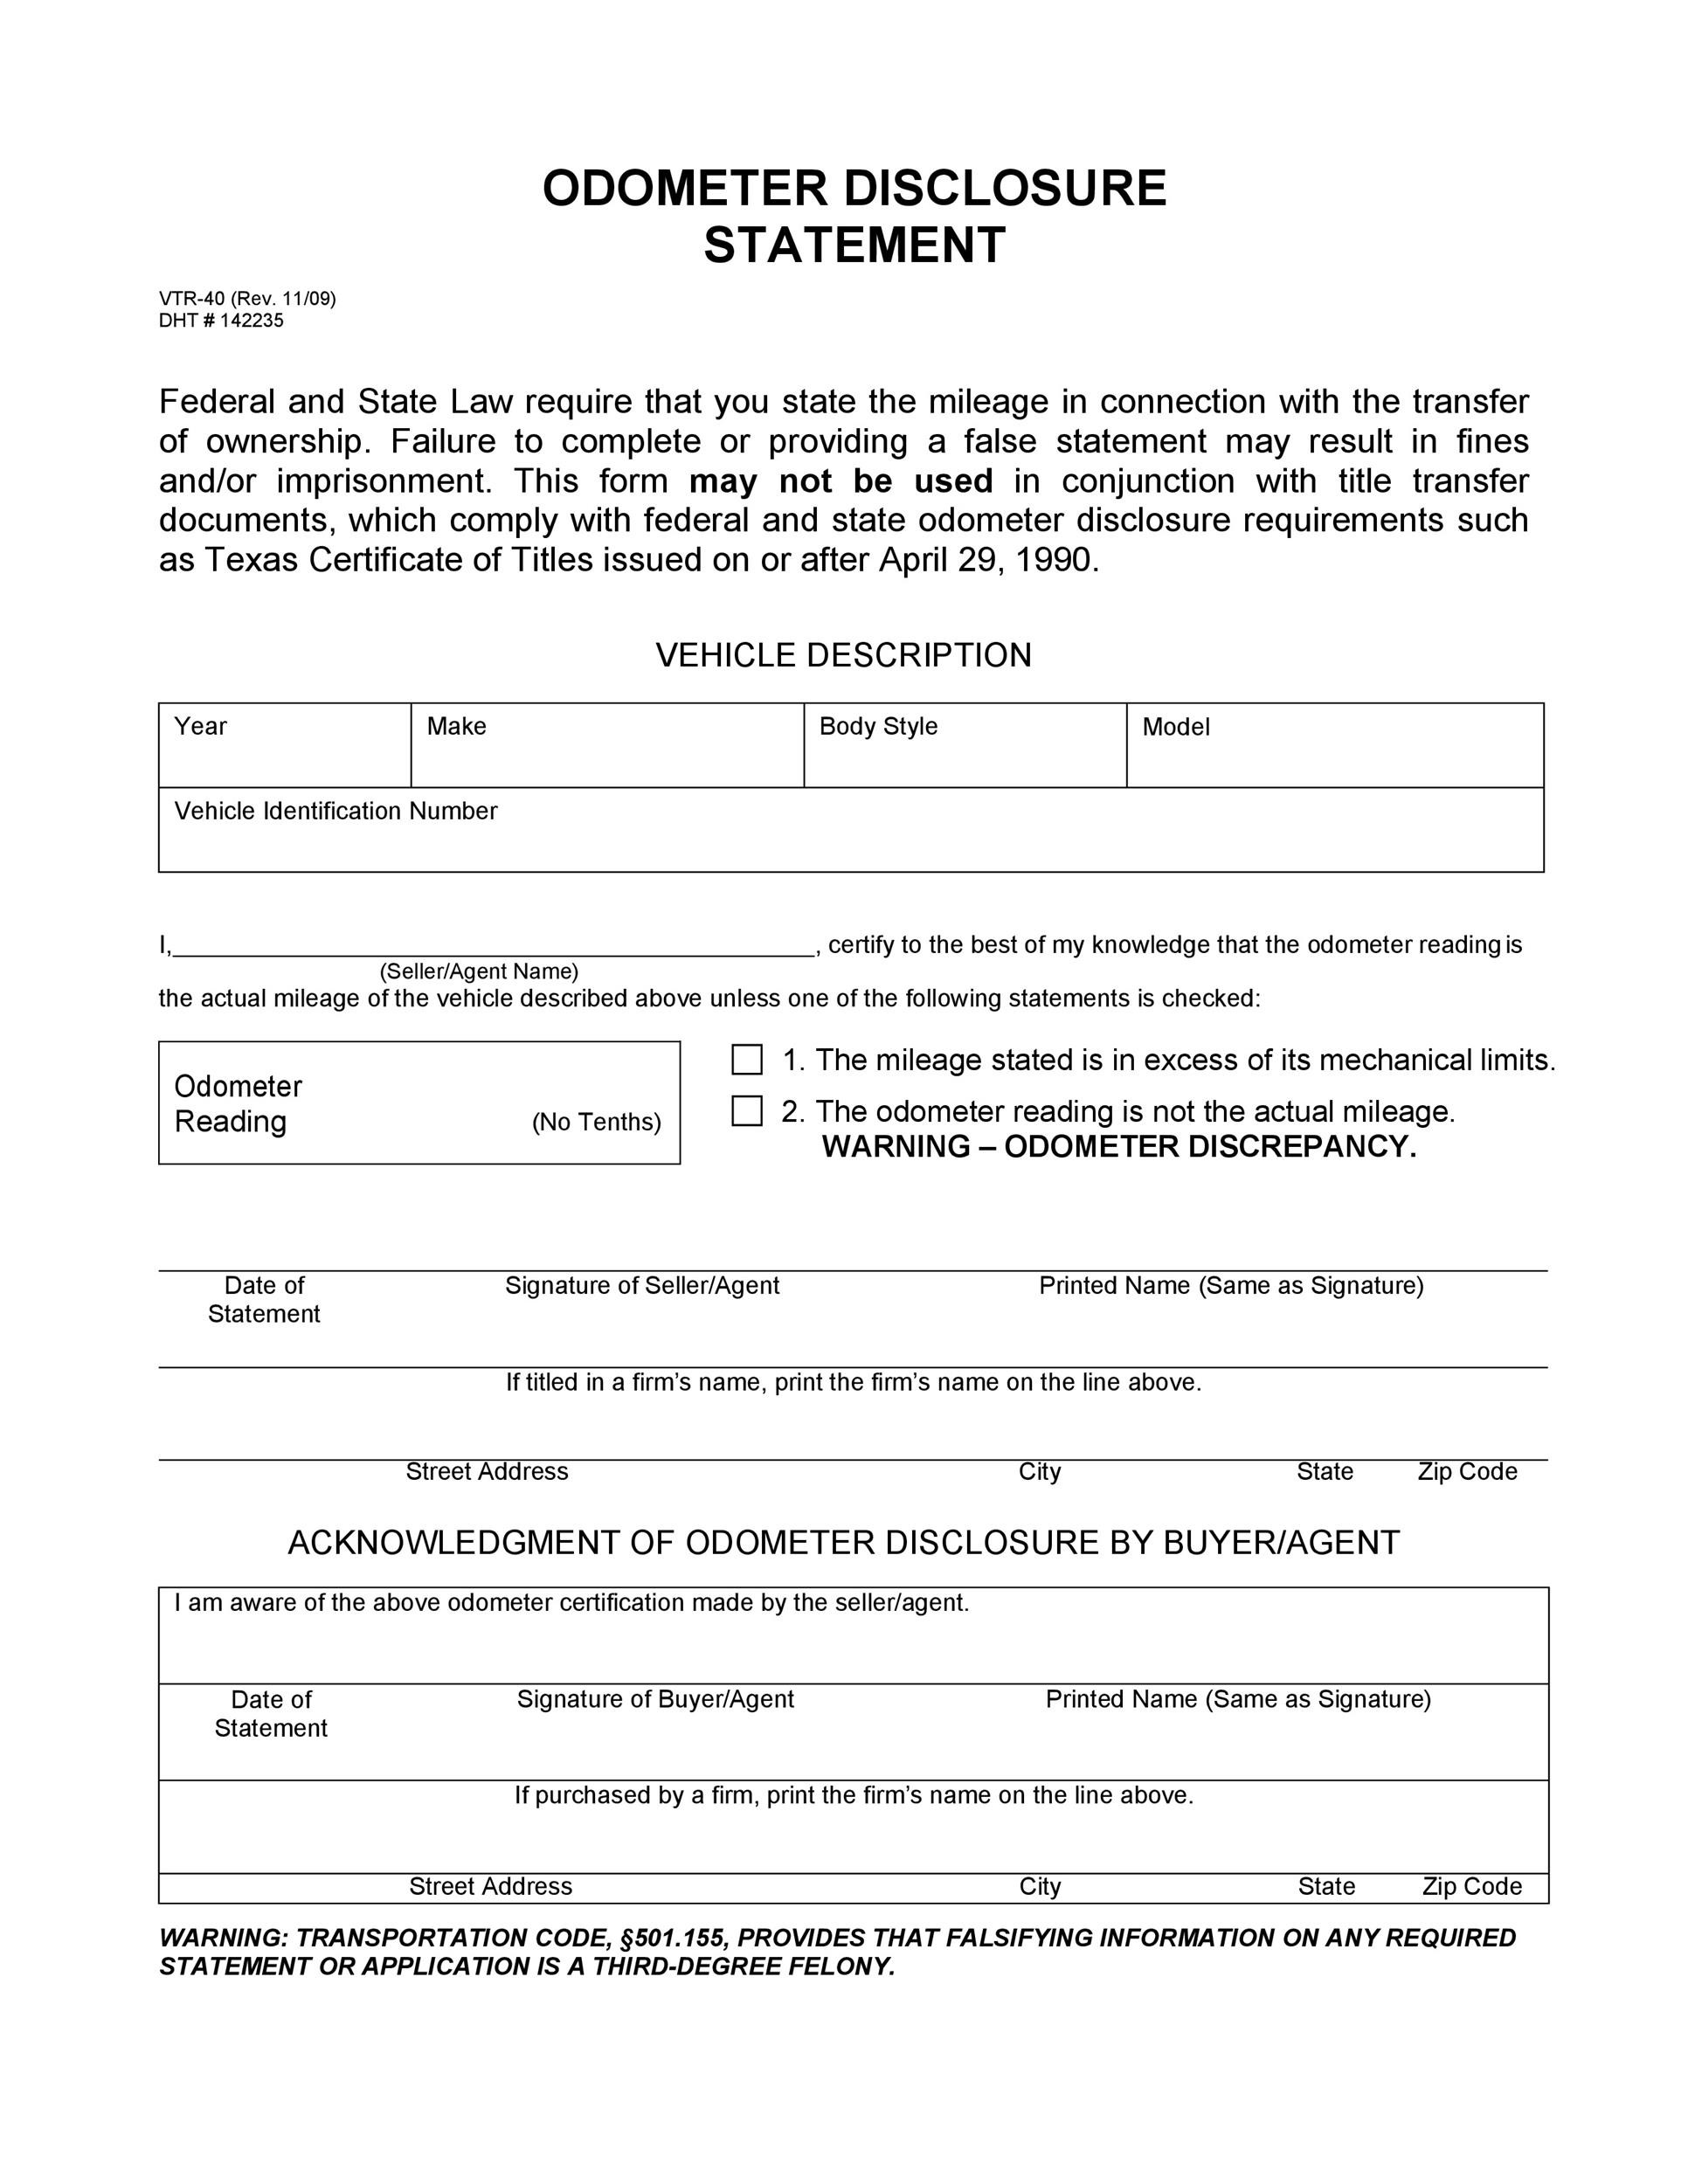 odometer disclosure statement form